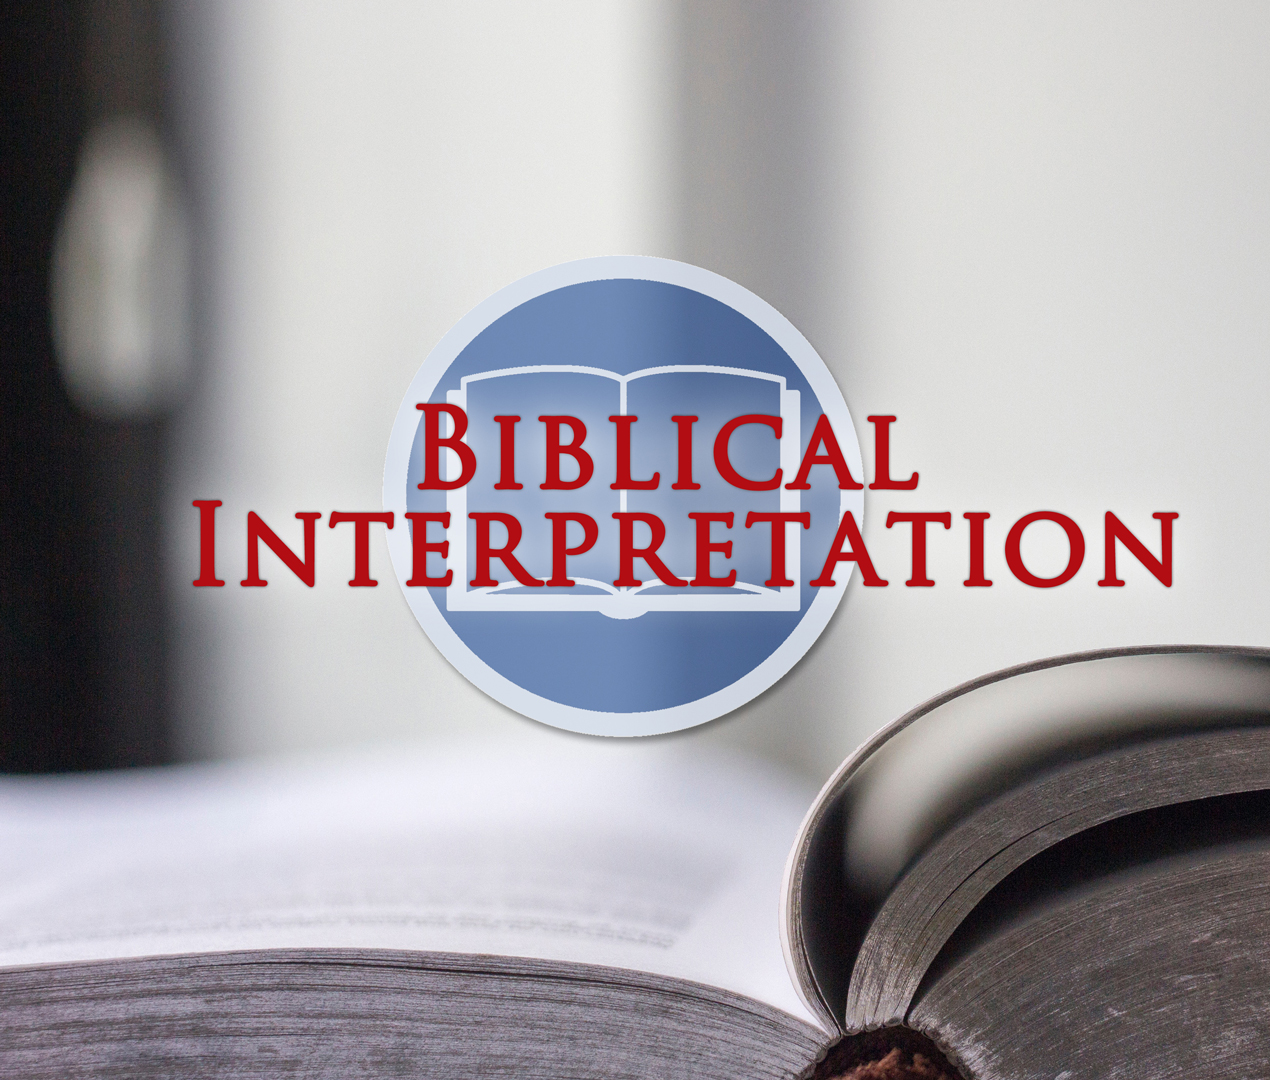 Biblical Interpretation: Anthropology (Positive Humanism) - Preached: 4/29/2018